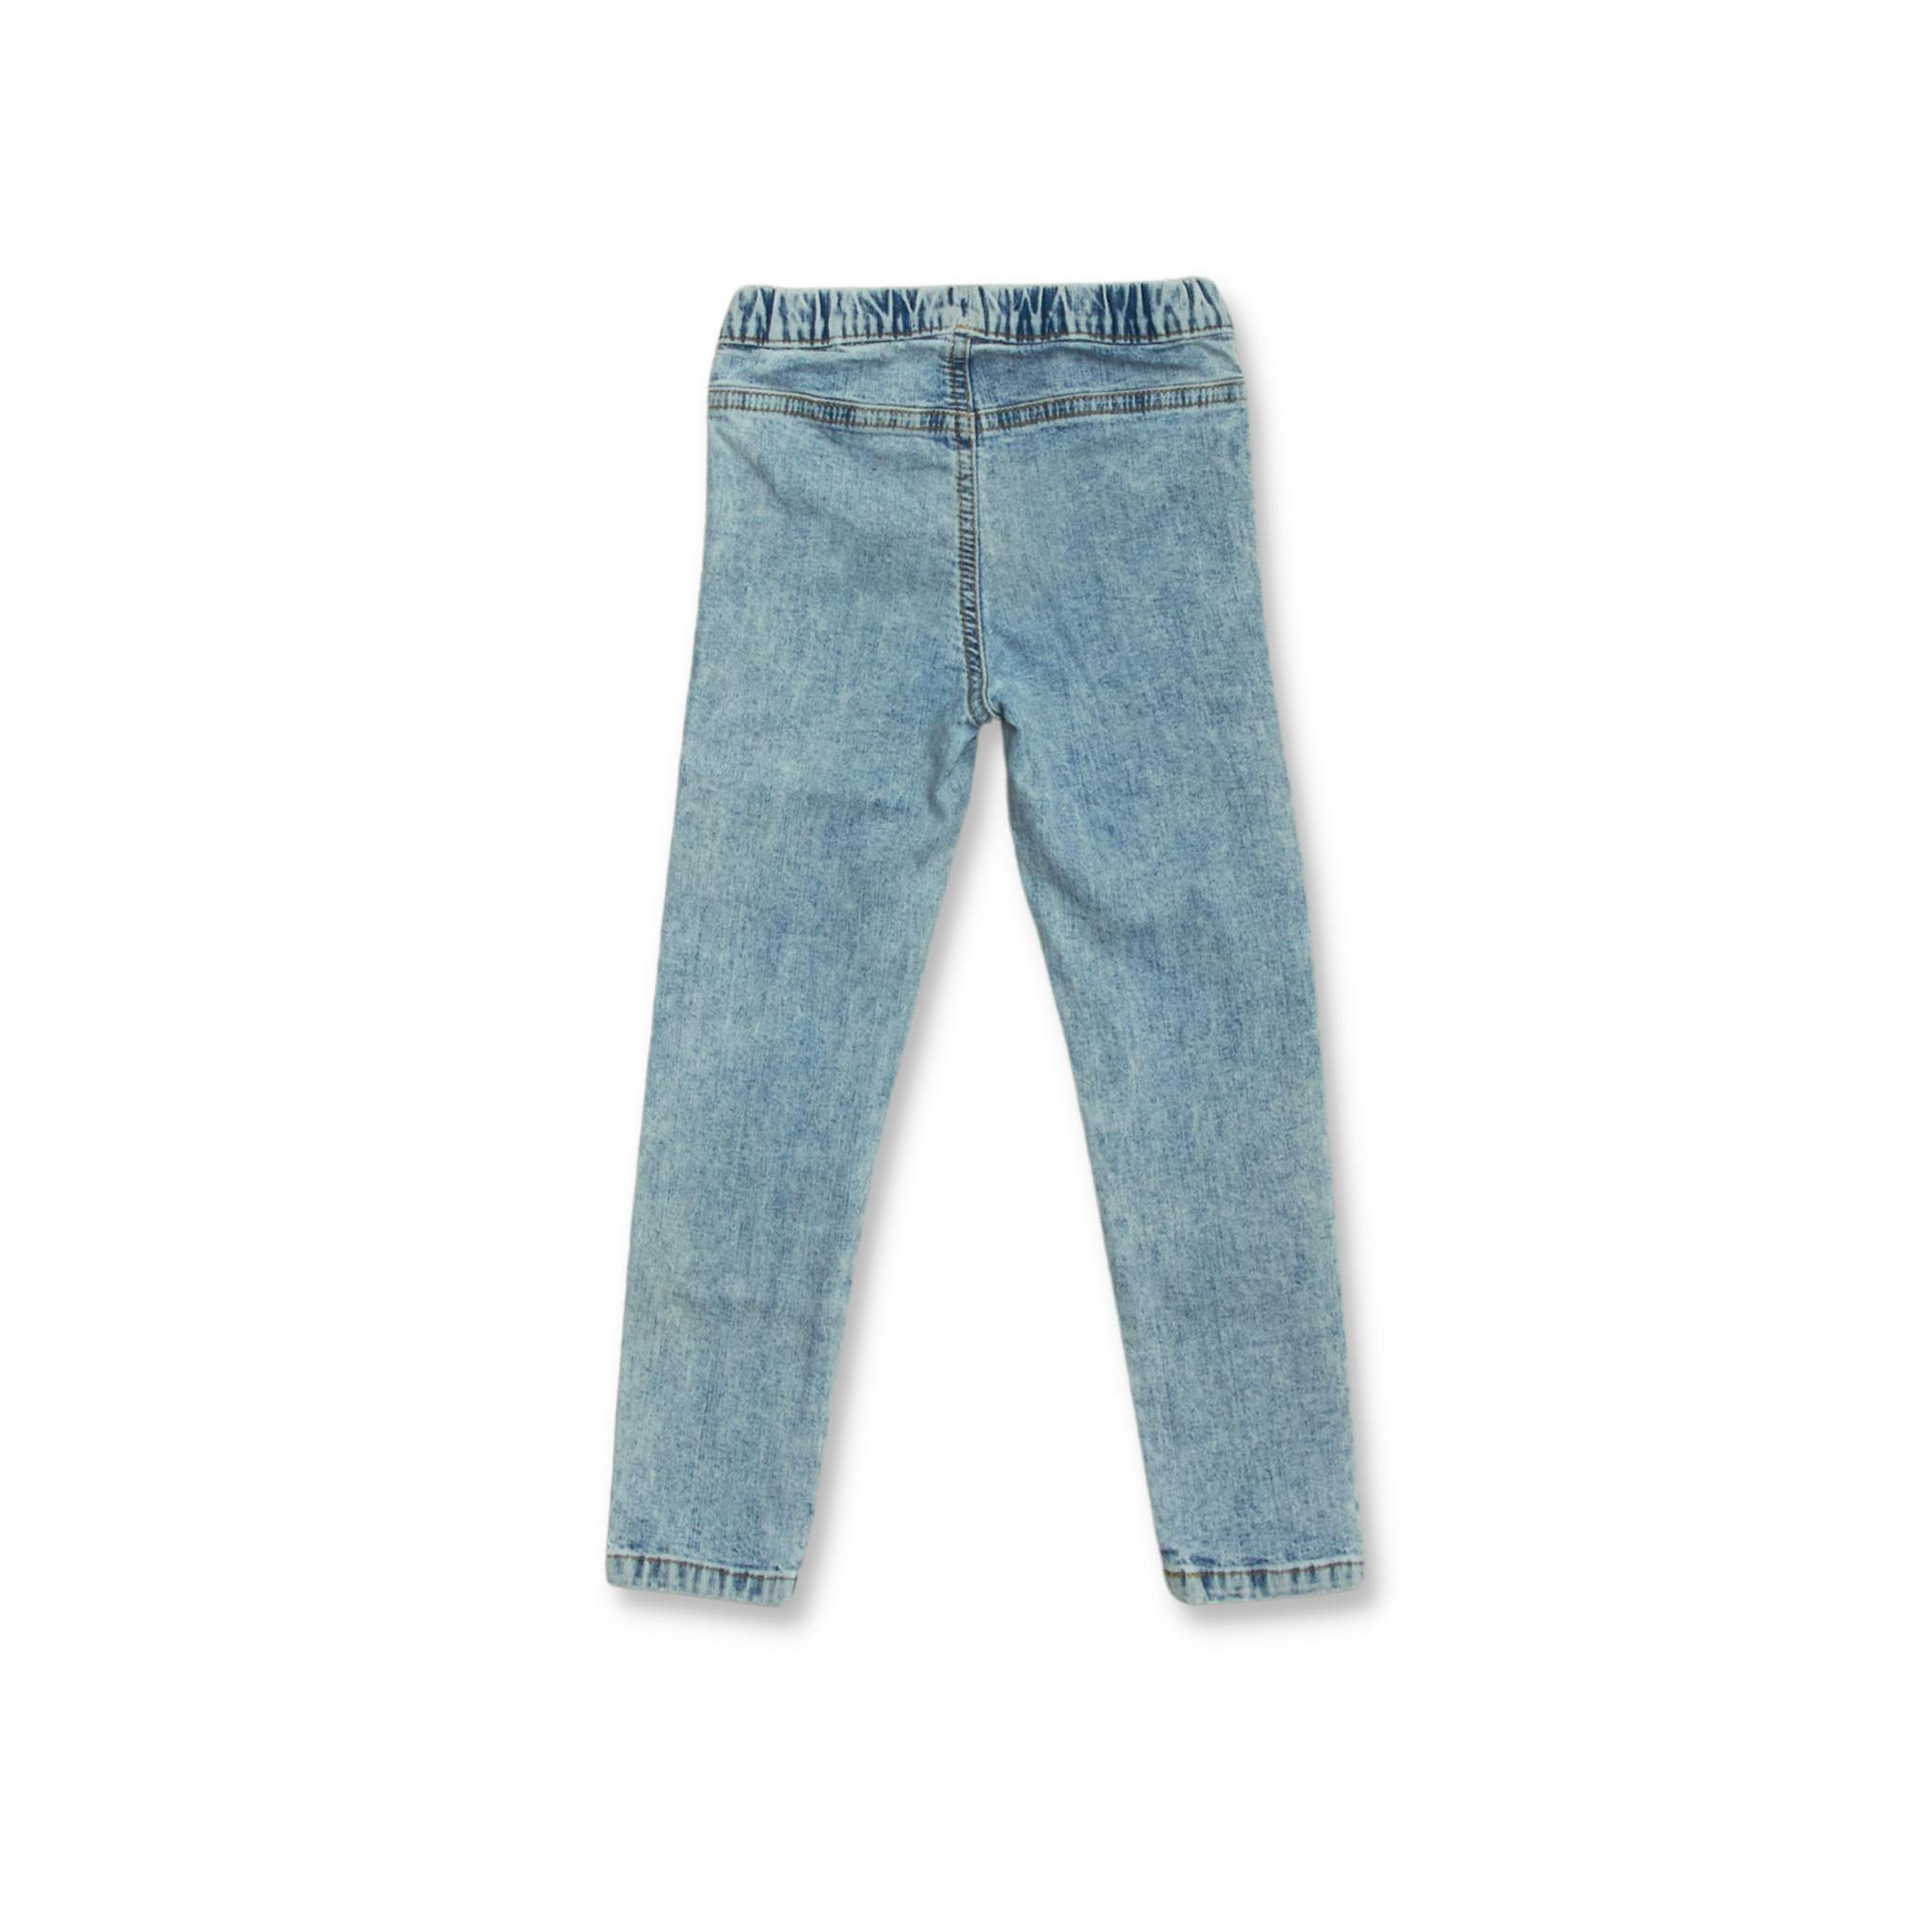 Slitstarka slim fit jeans/legging, Stl 110, Lindex